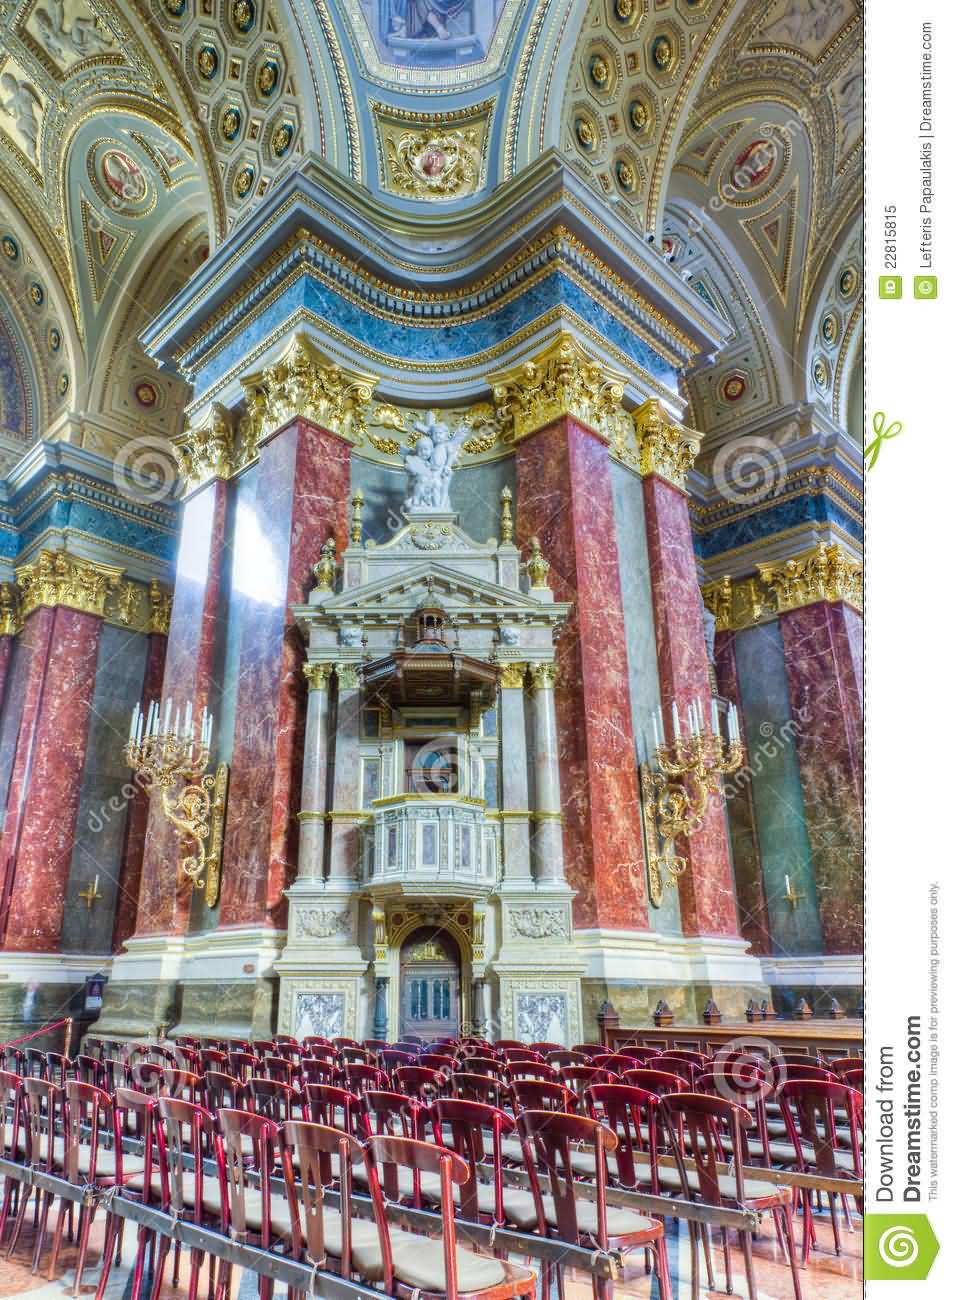 St. Stephen's Basilica Interior, Budapest